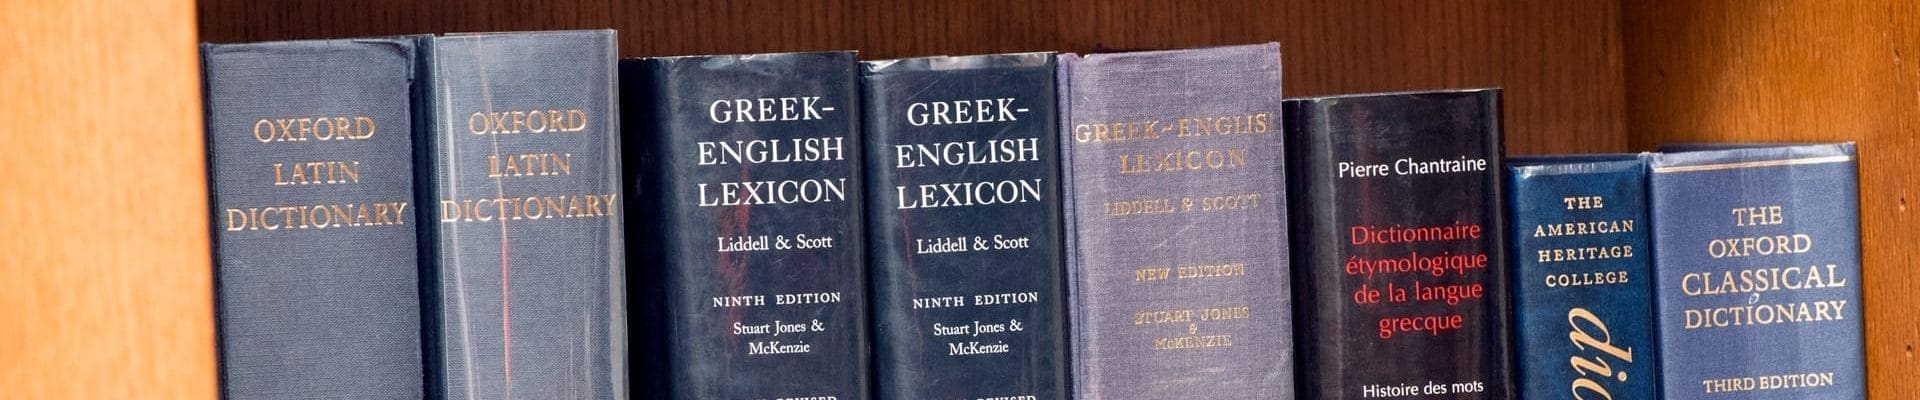 Greek-english and Latin dictionaries